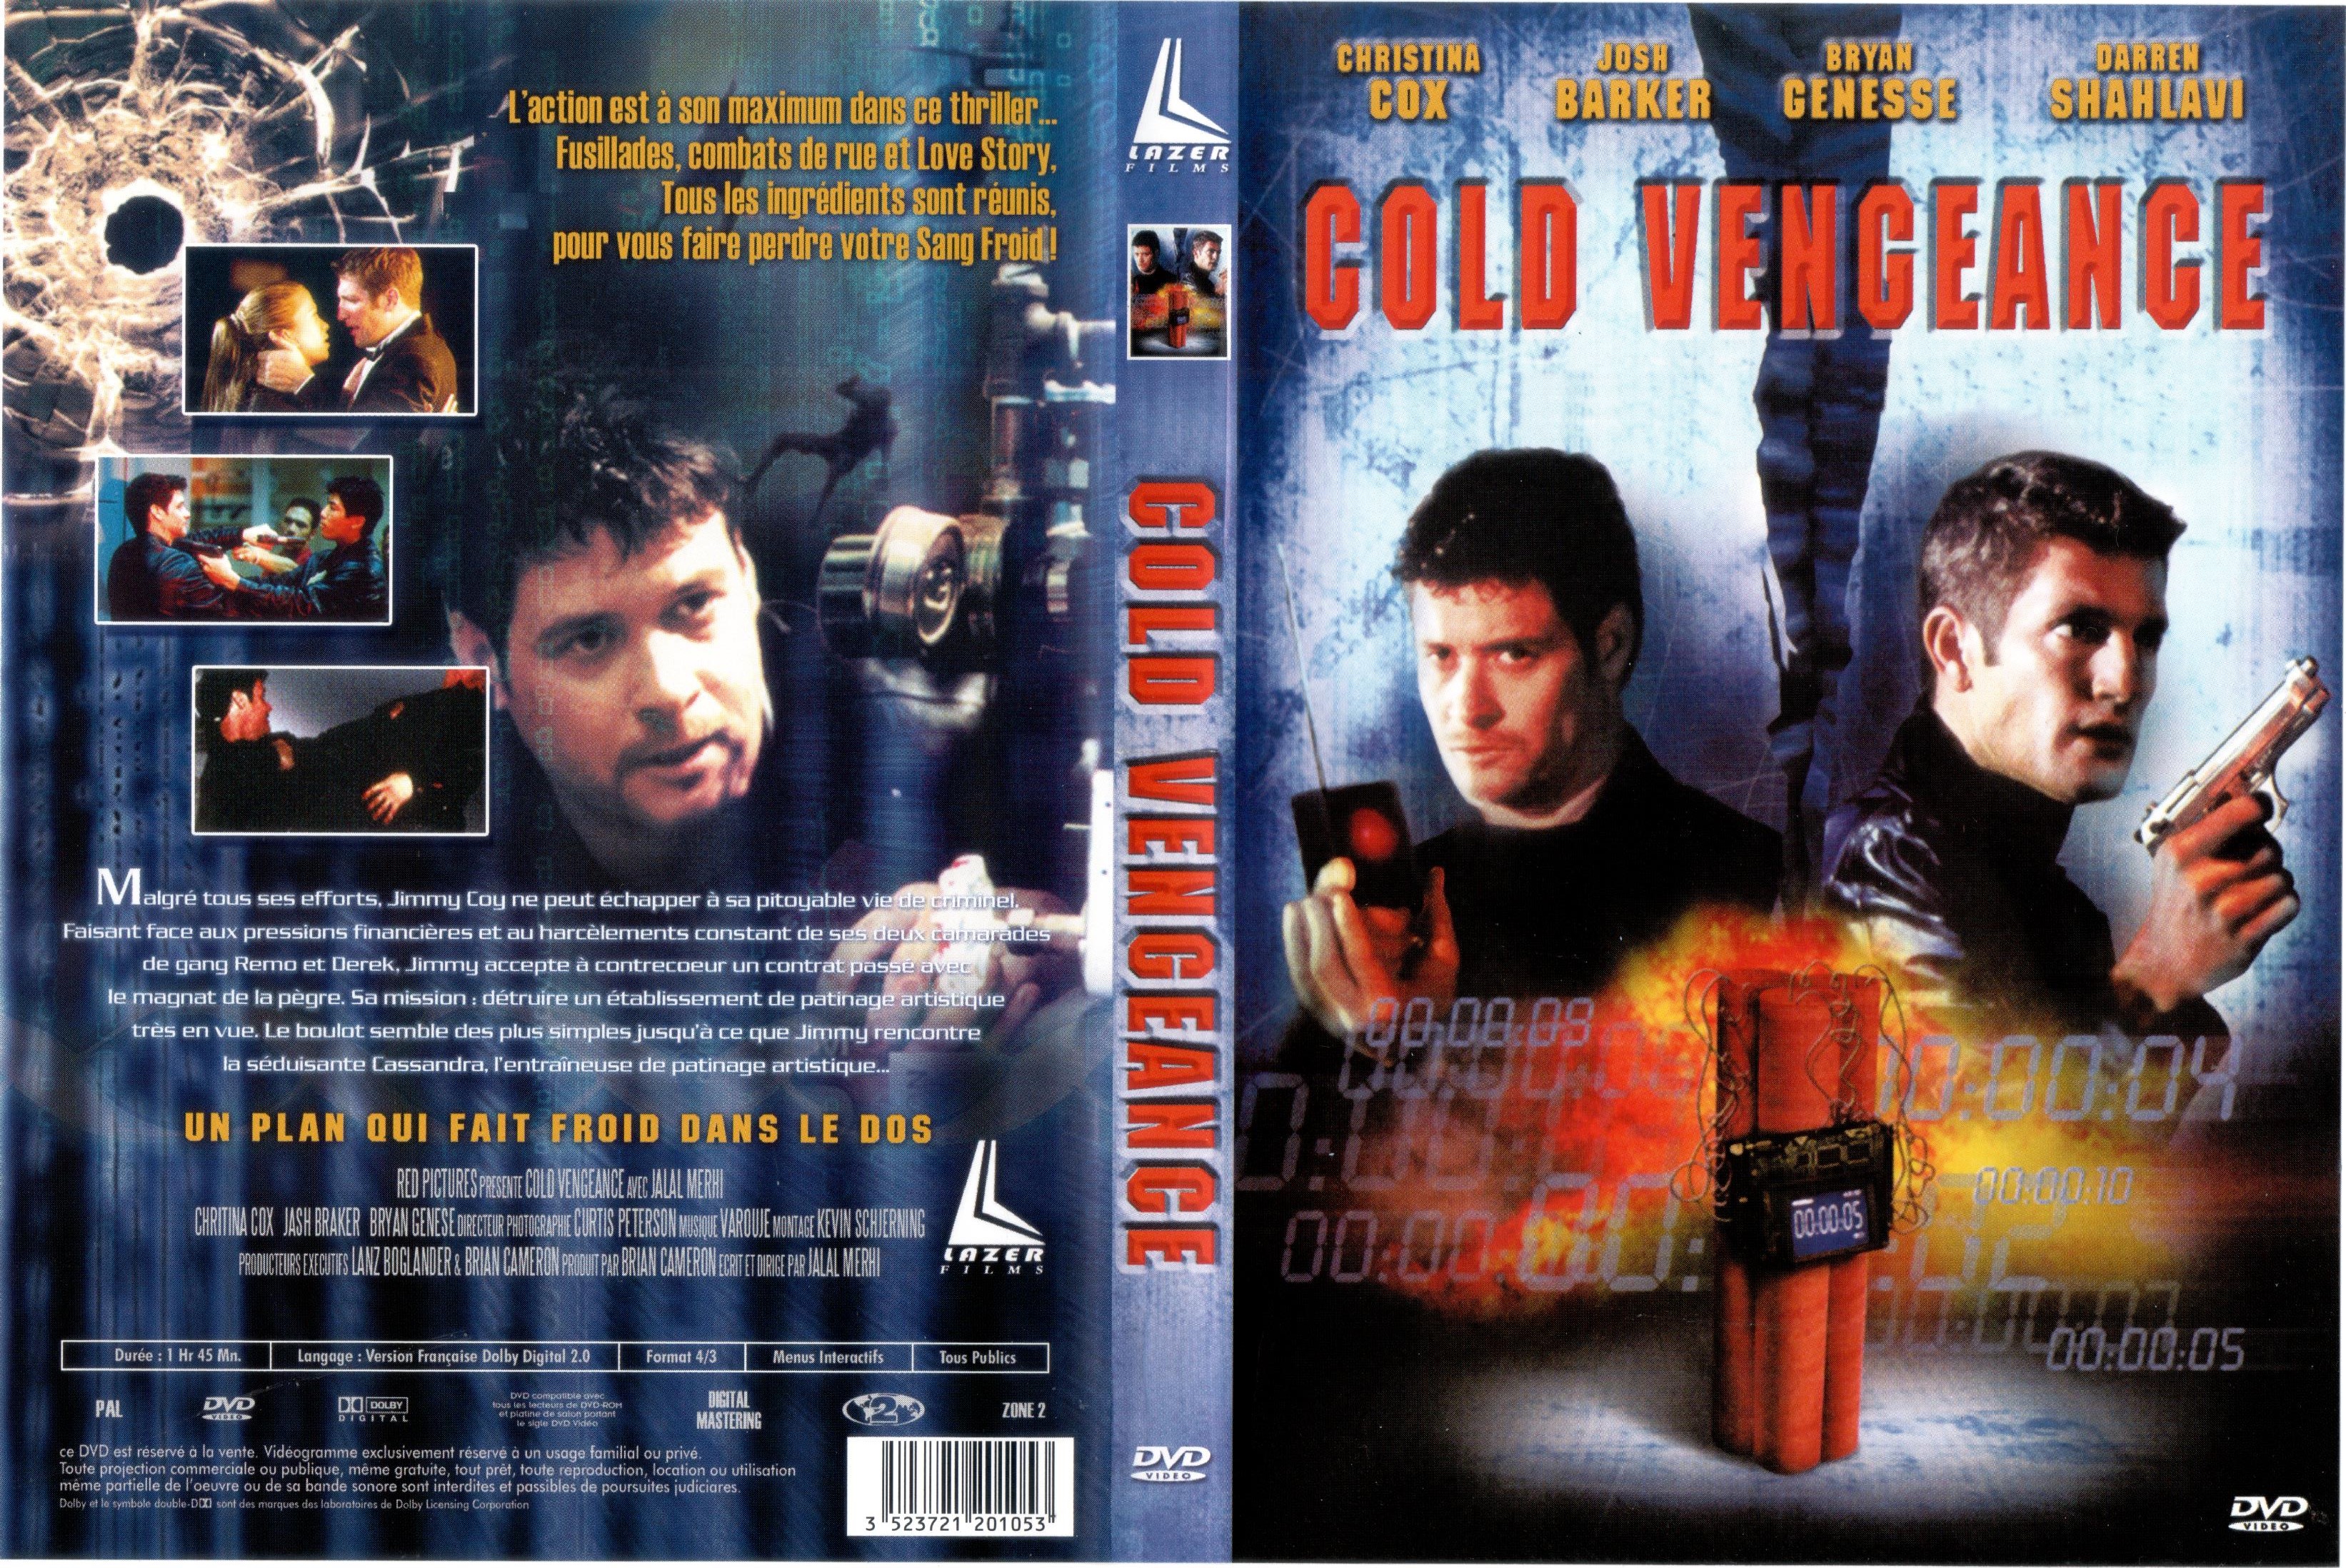 Jaquette DVD Cold vengeance